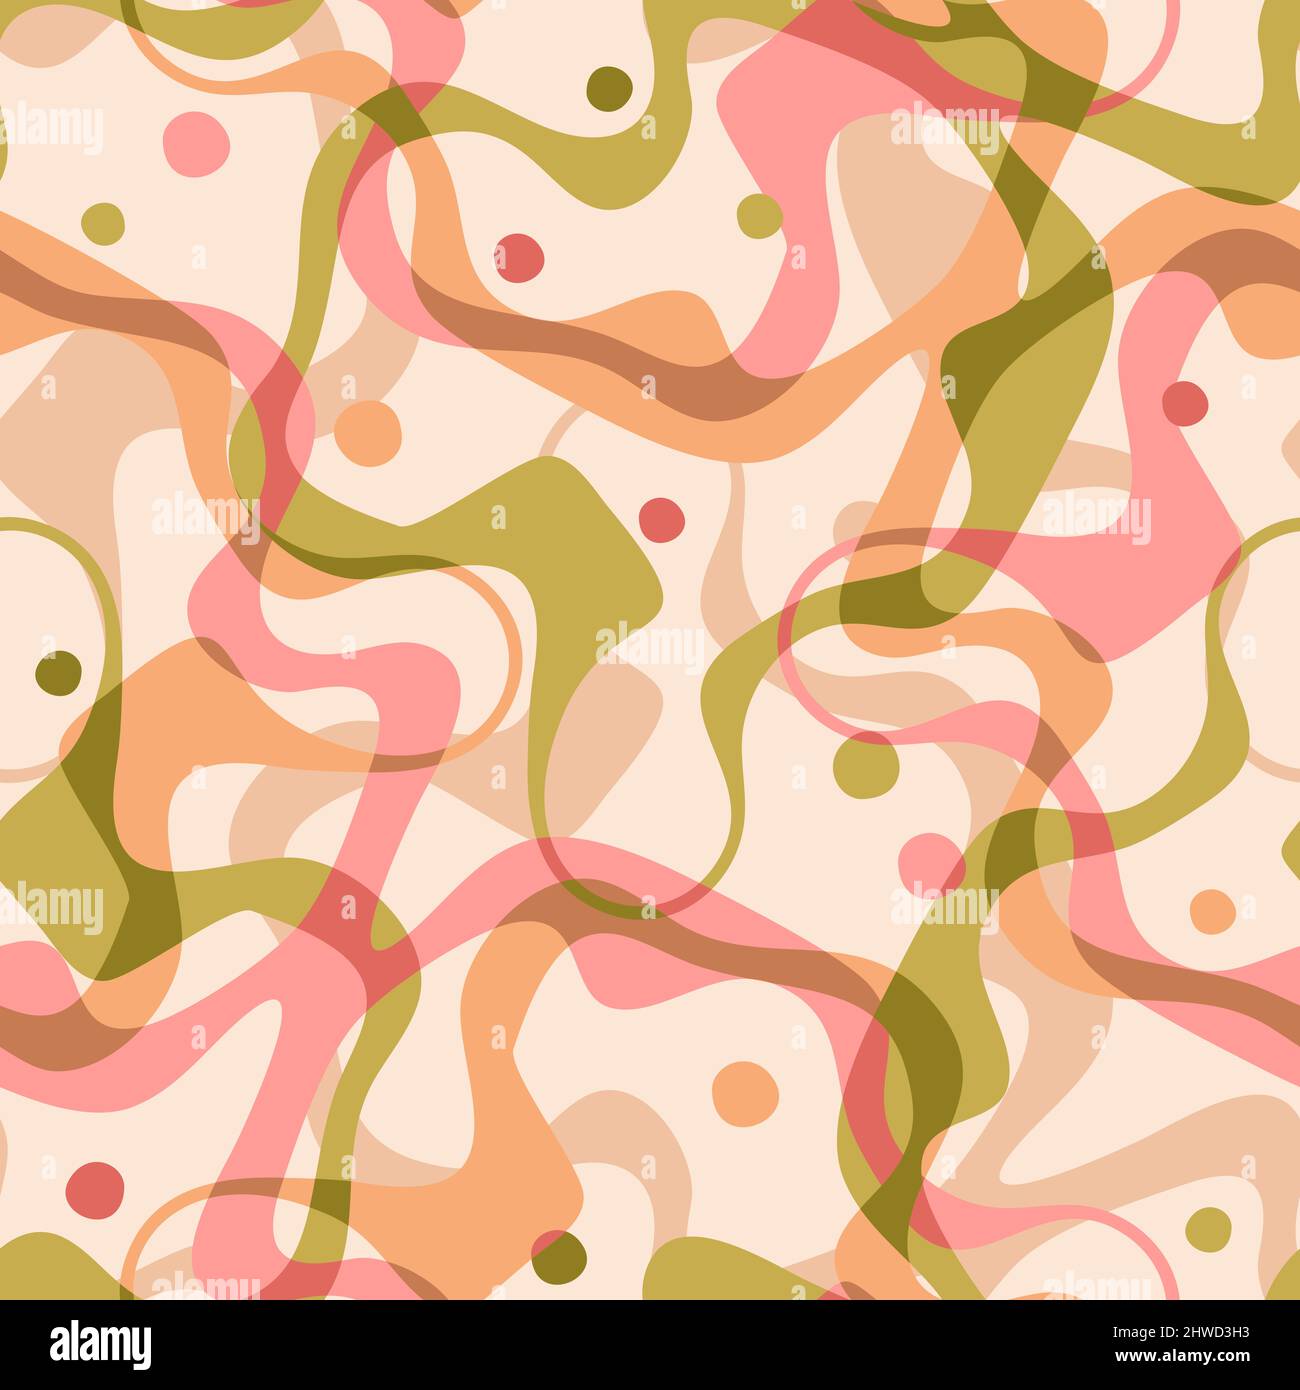 Seamless pattern with organic abstract motifs Stock Photo